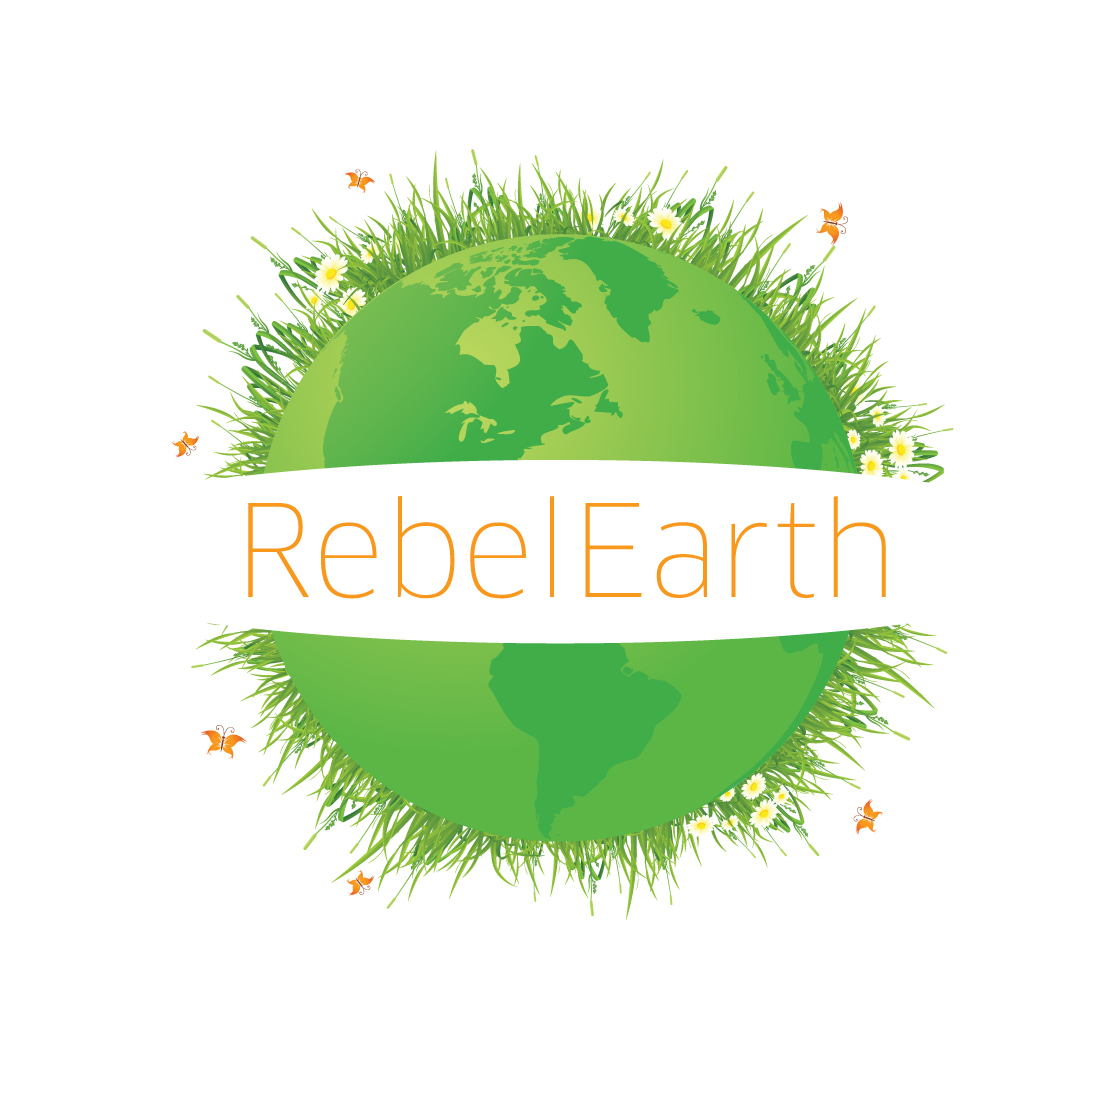 RebelEarth Urban Farm: Taking Back the Planet | Future Growing LLC